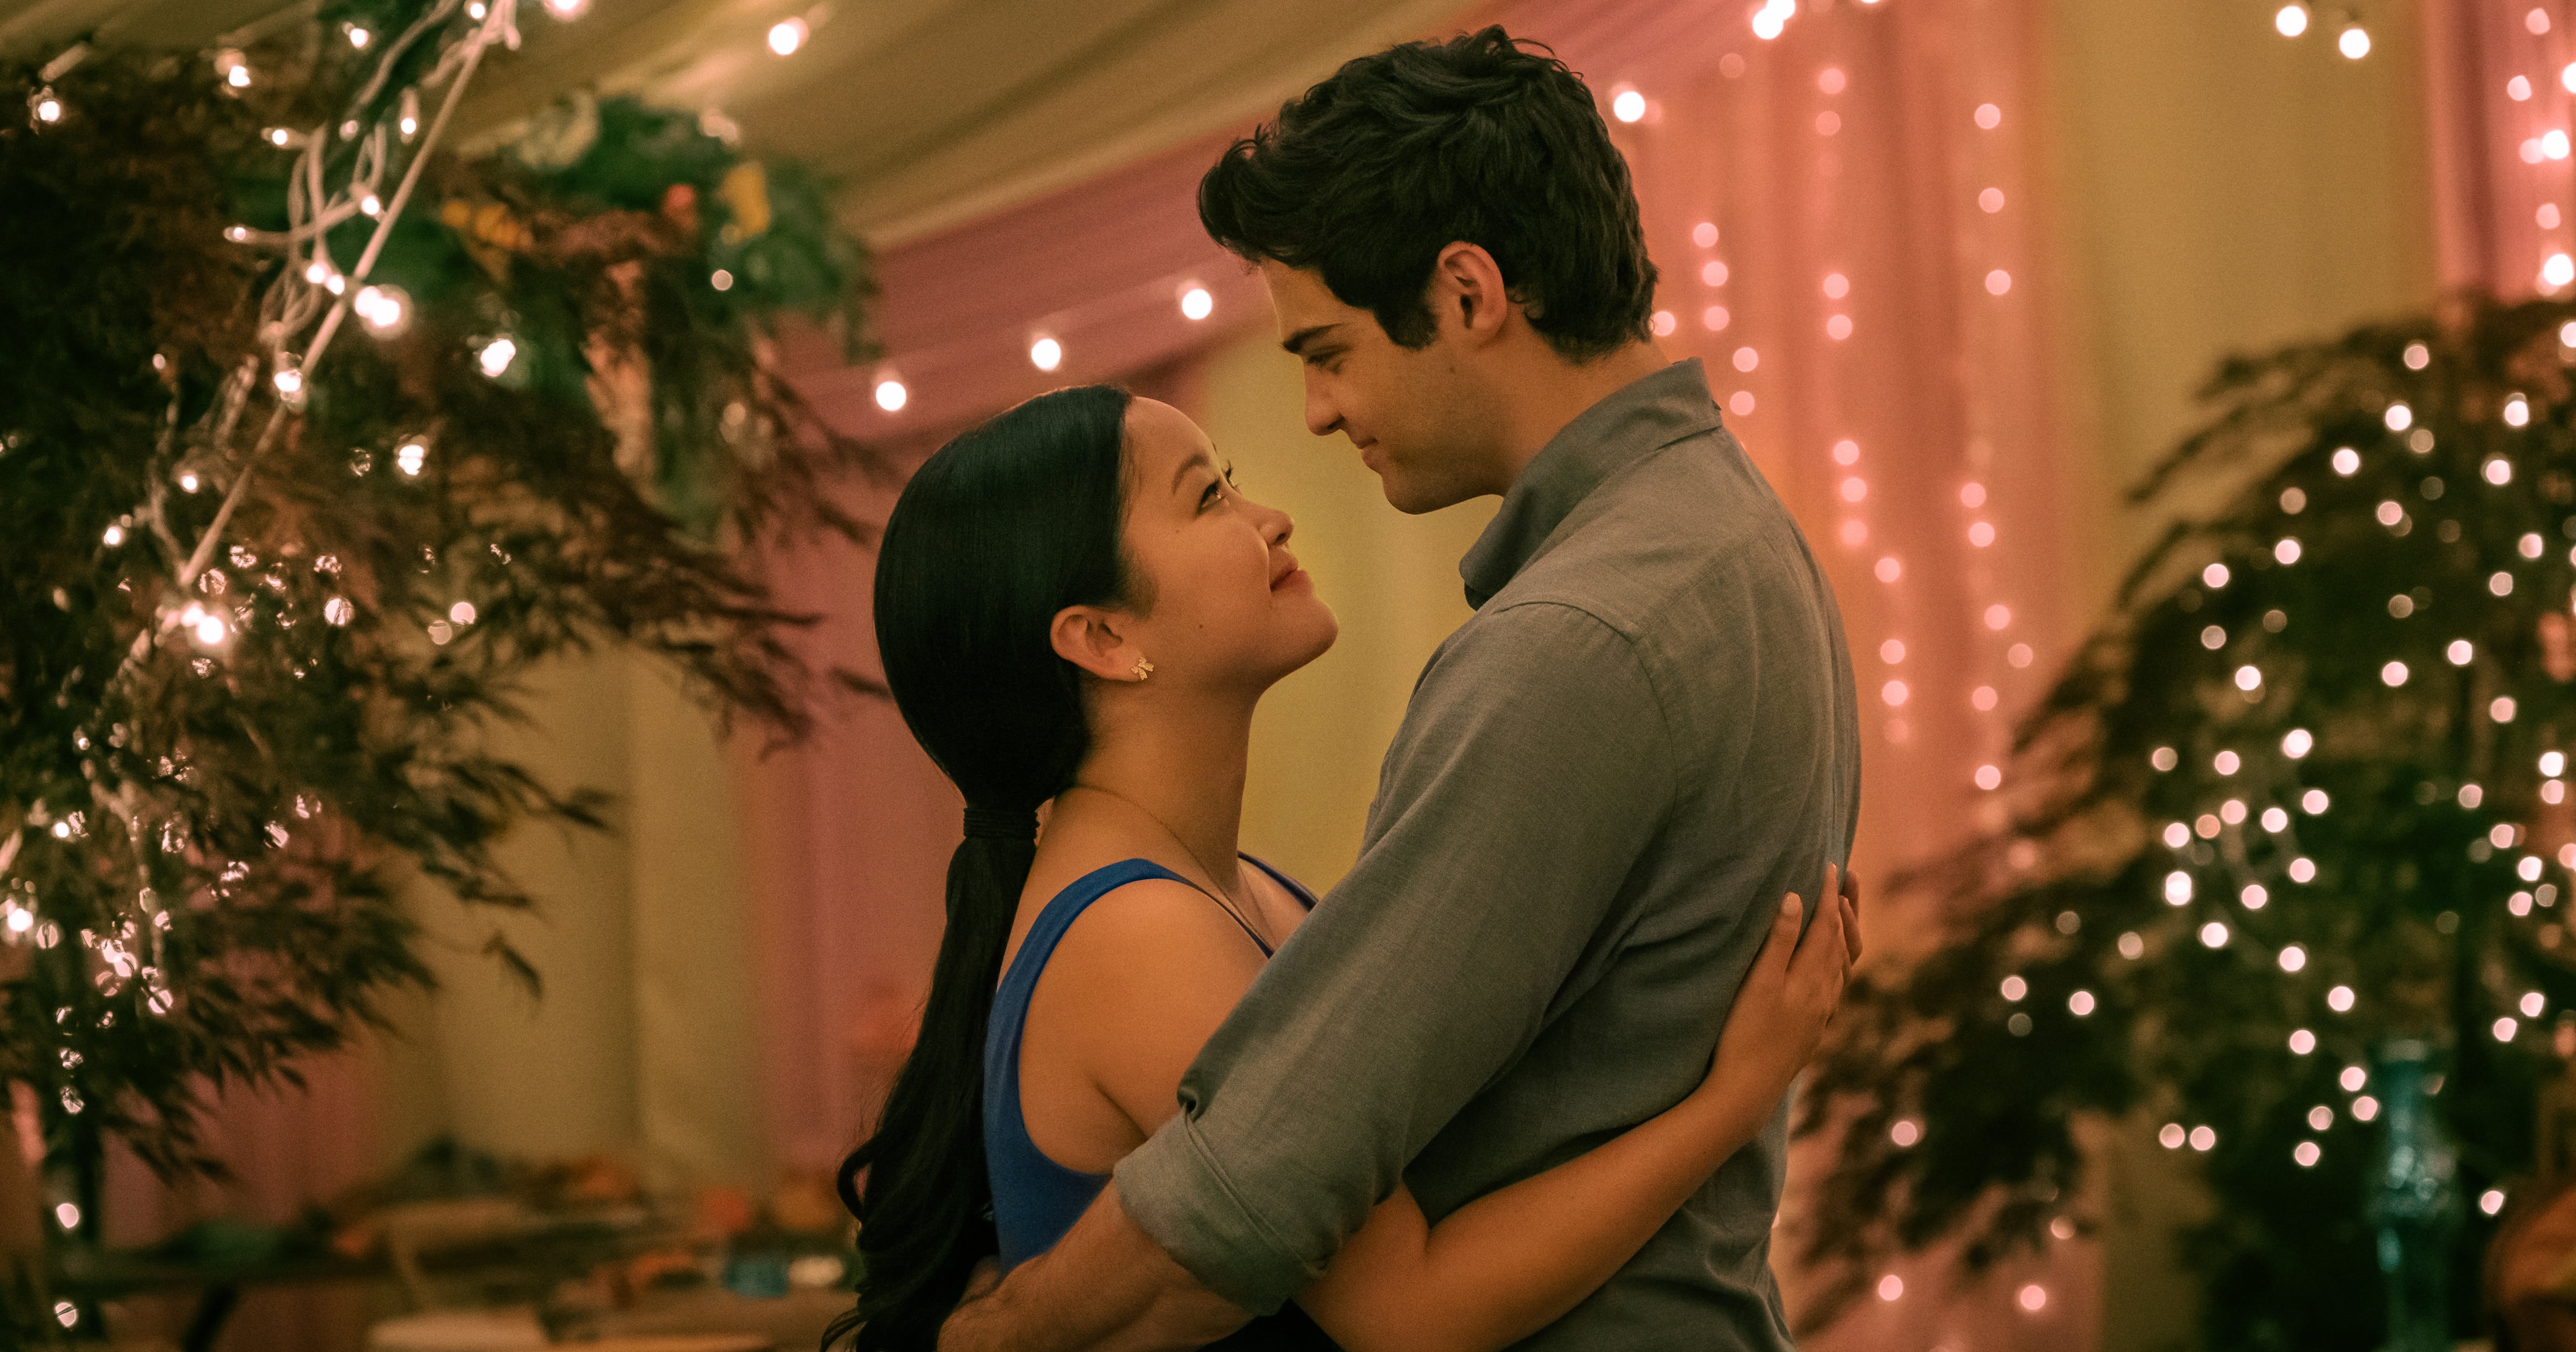 50 Best Romantic Movies on Netflix 2023 - Top Romance Films